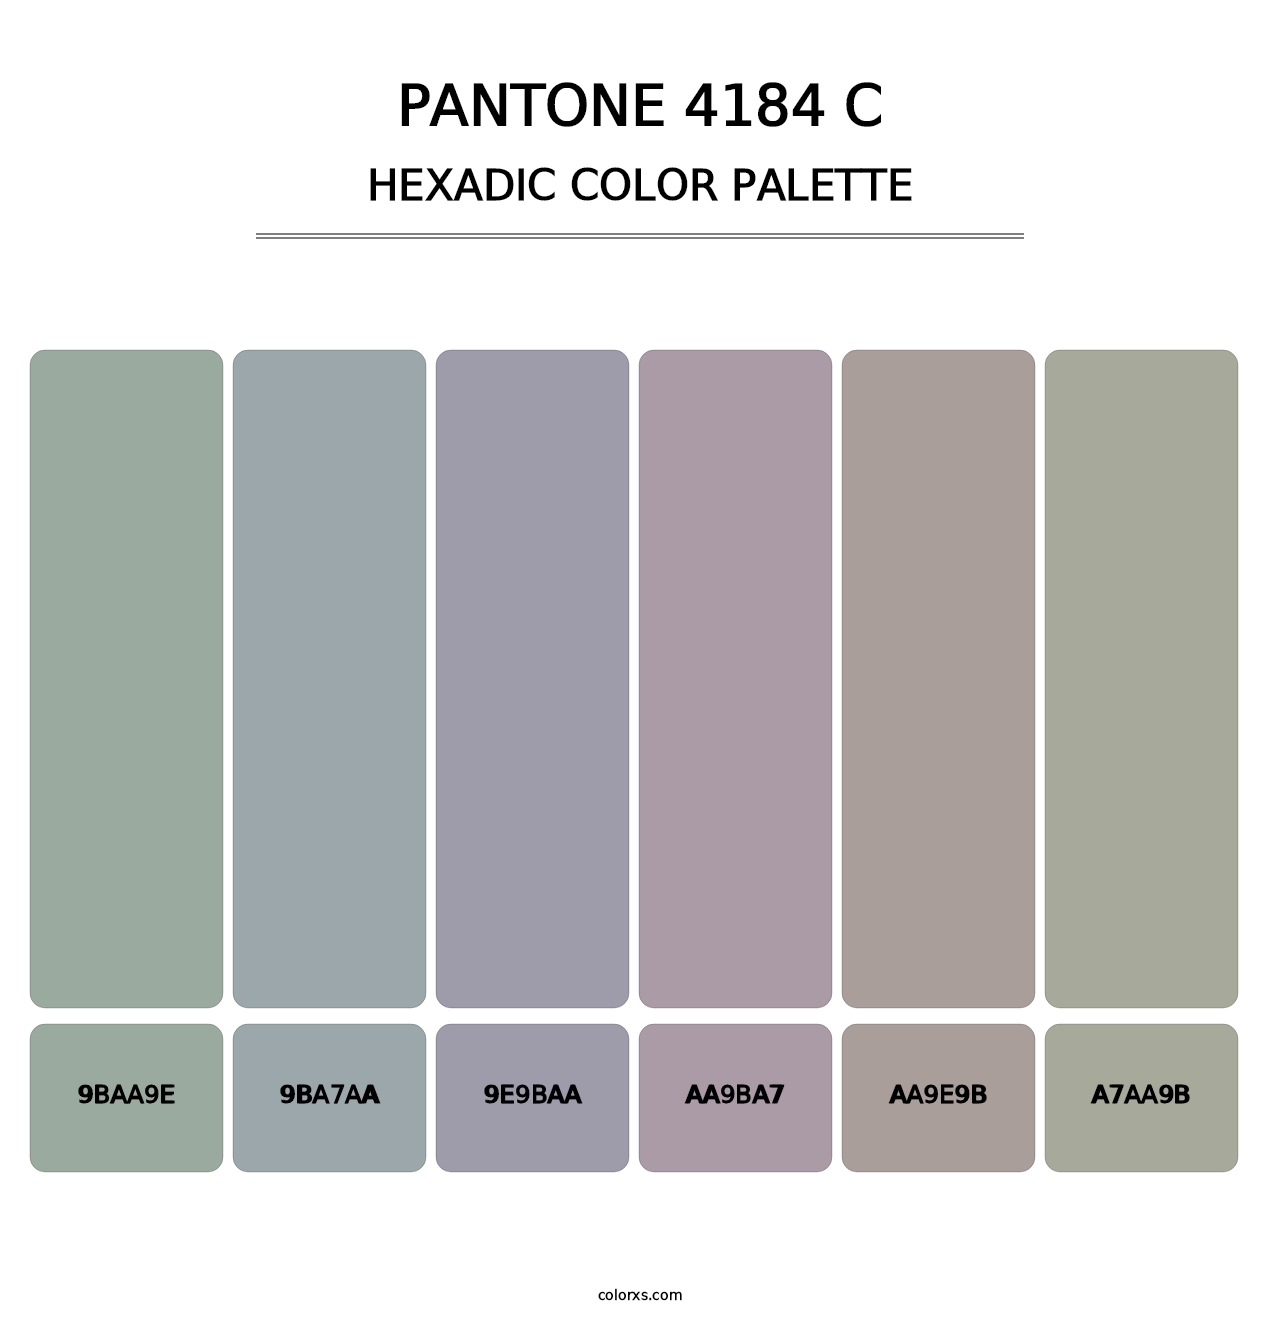 PANTONE 4184 C - Hexadic Color Palette